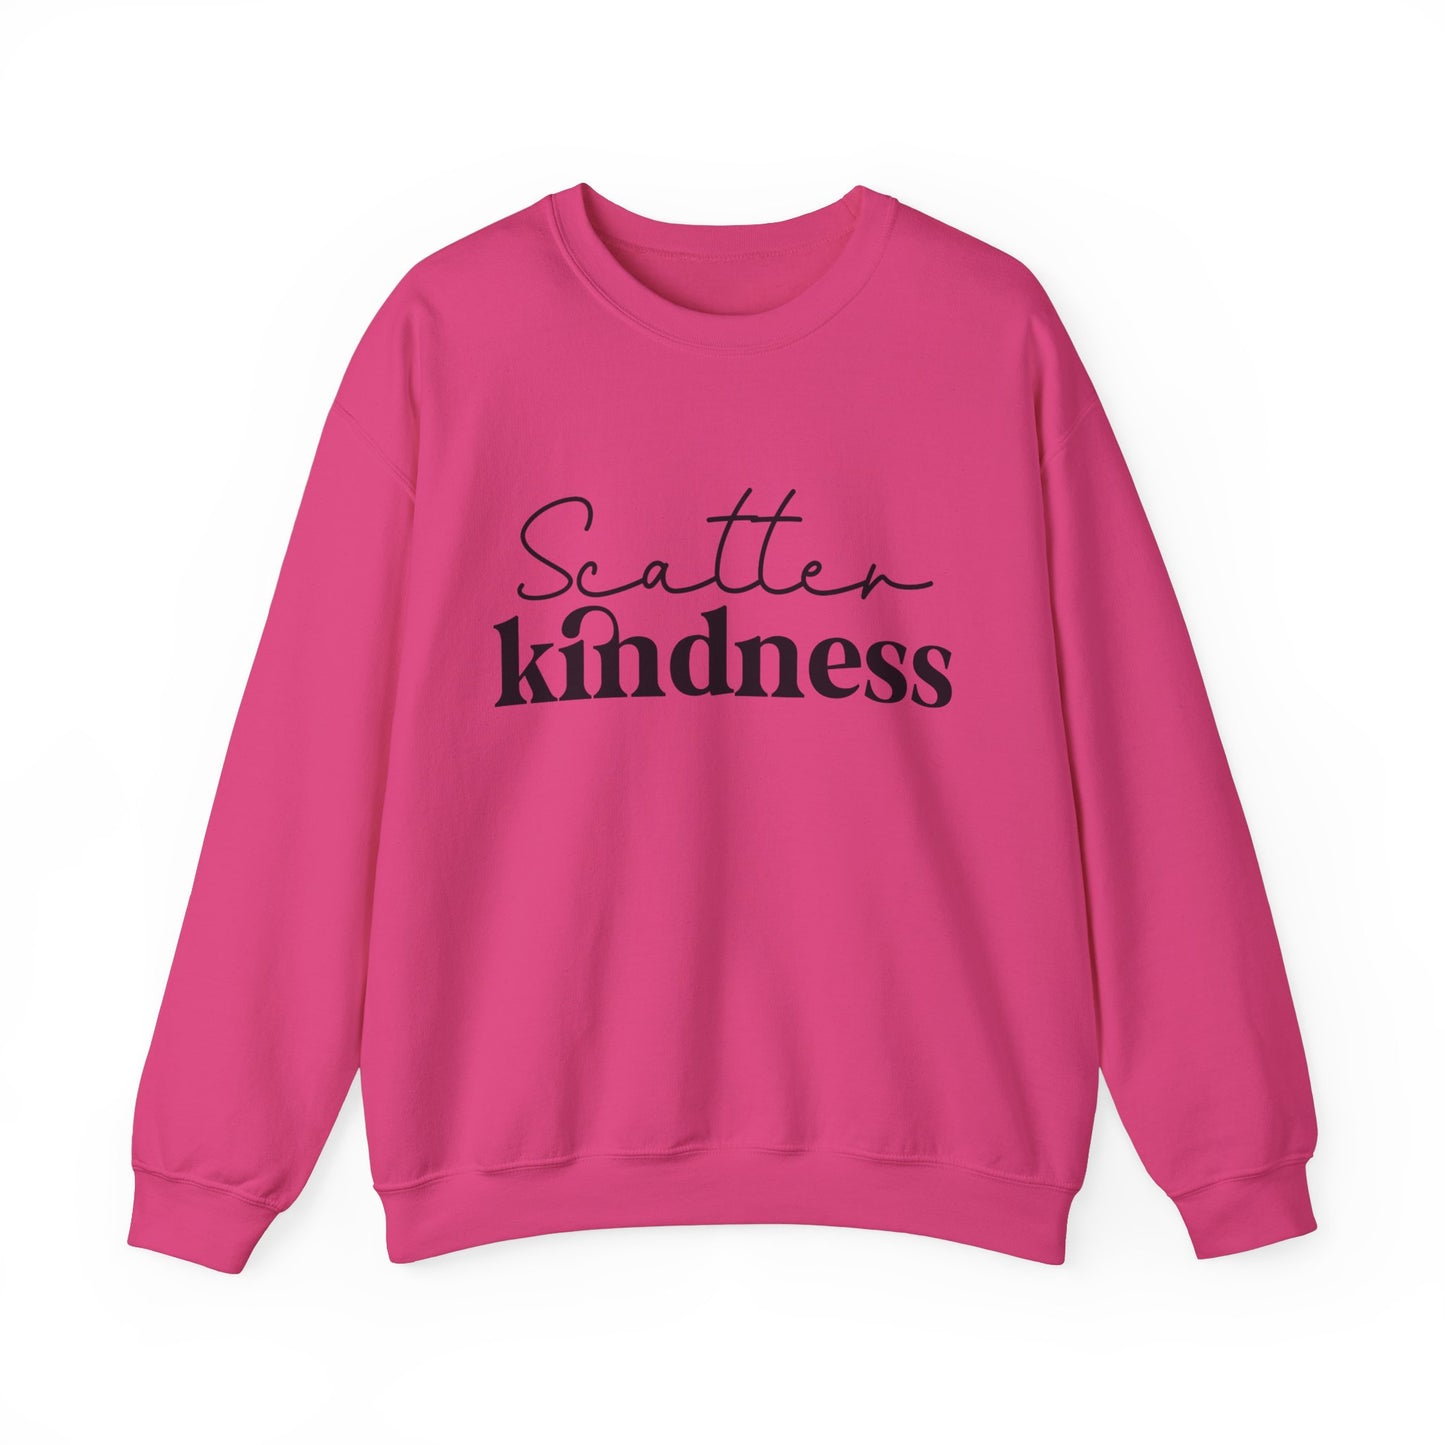 Scatter Kindness Women's Easter Bible Verse Sweatshirt